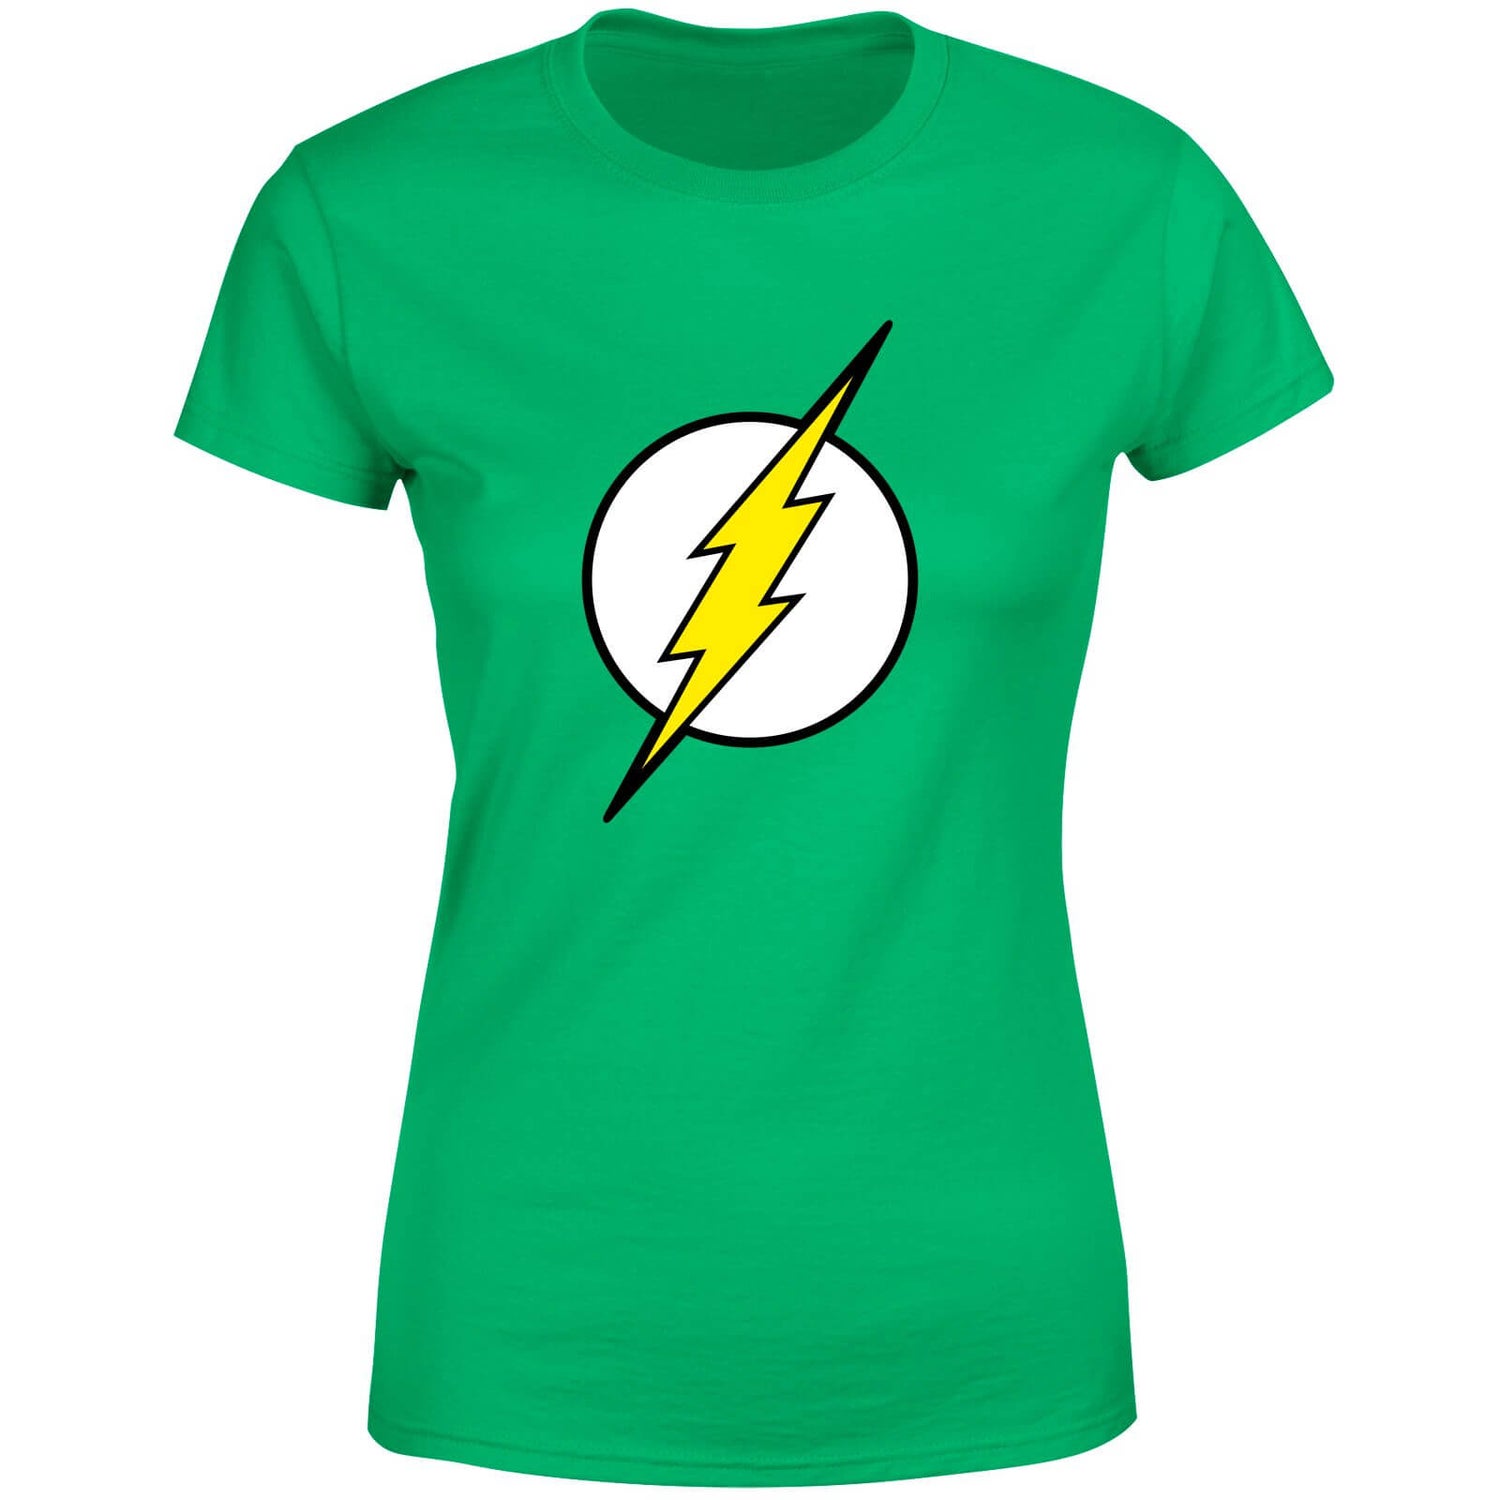 Justice League Flash Logo Women's T-Shirt - Kelly Green